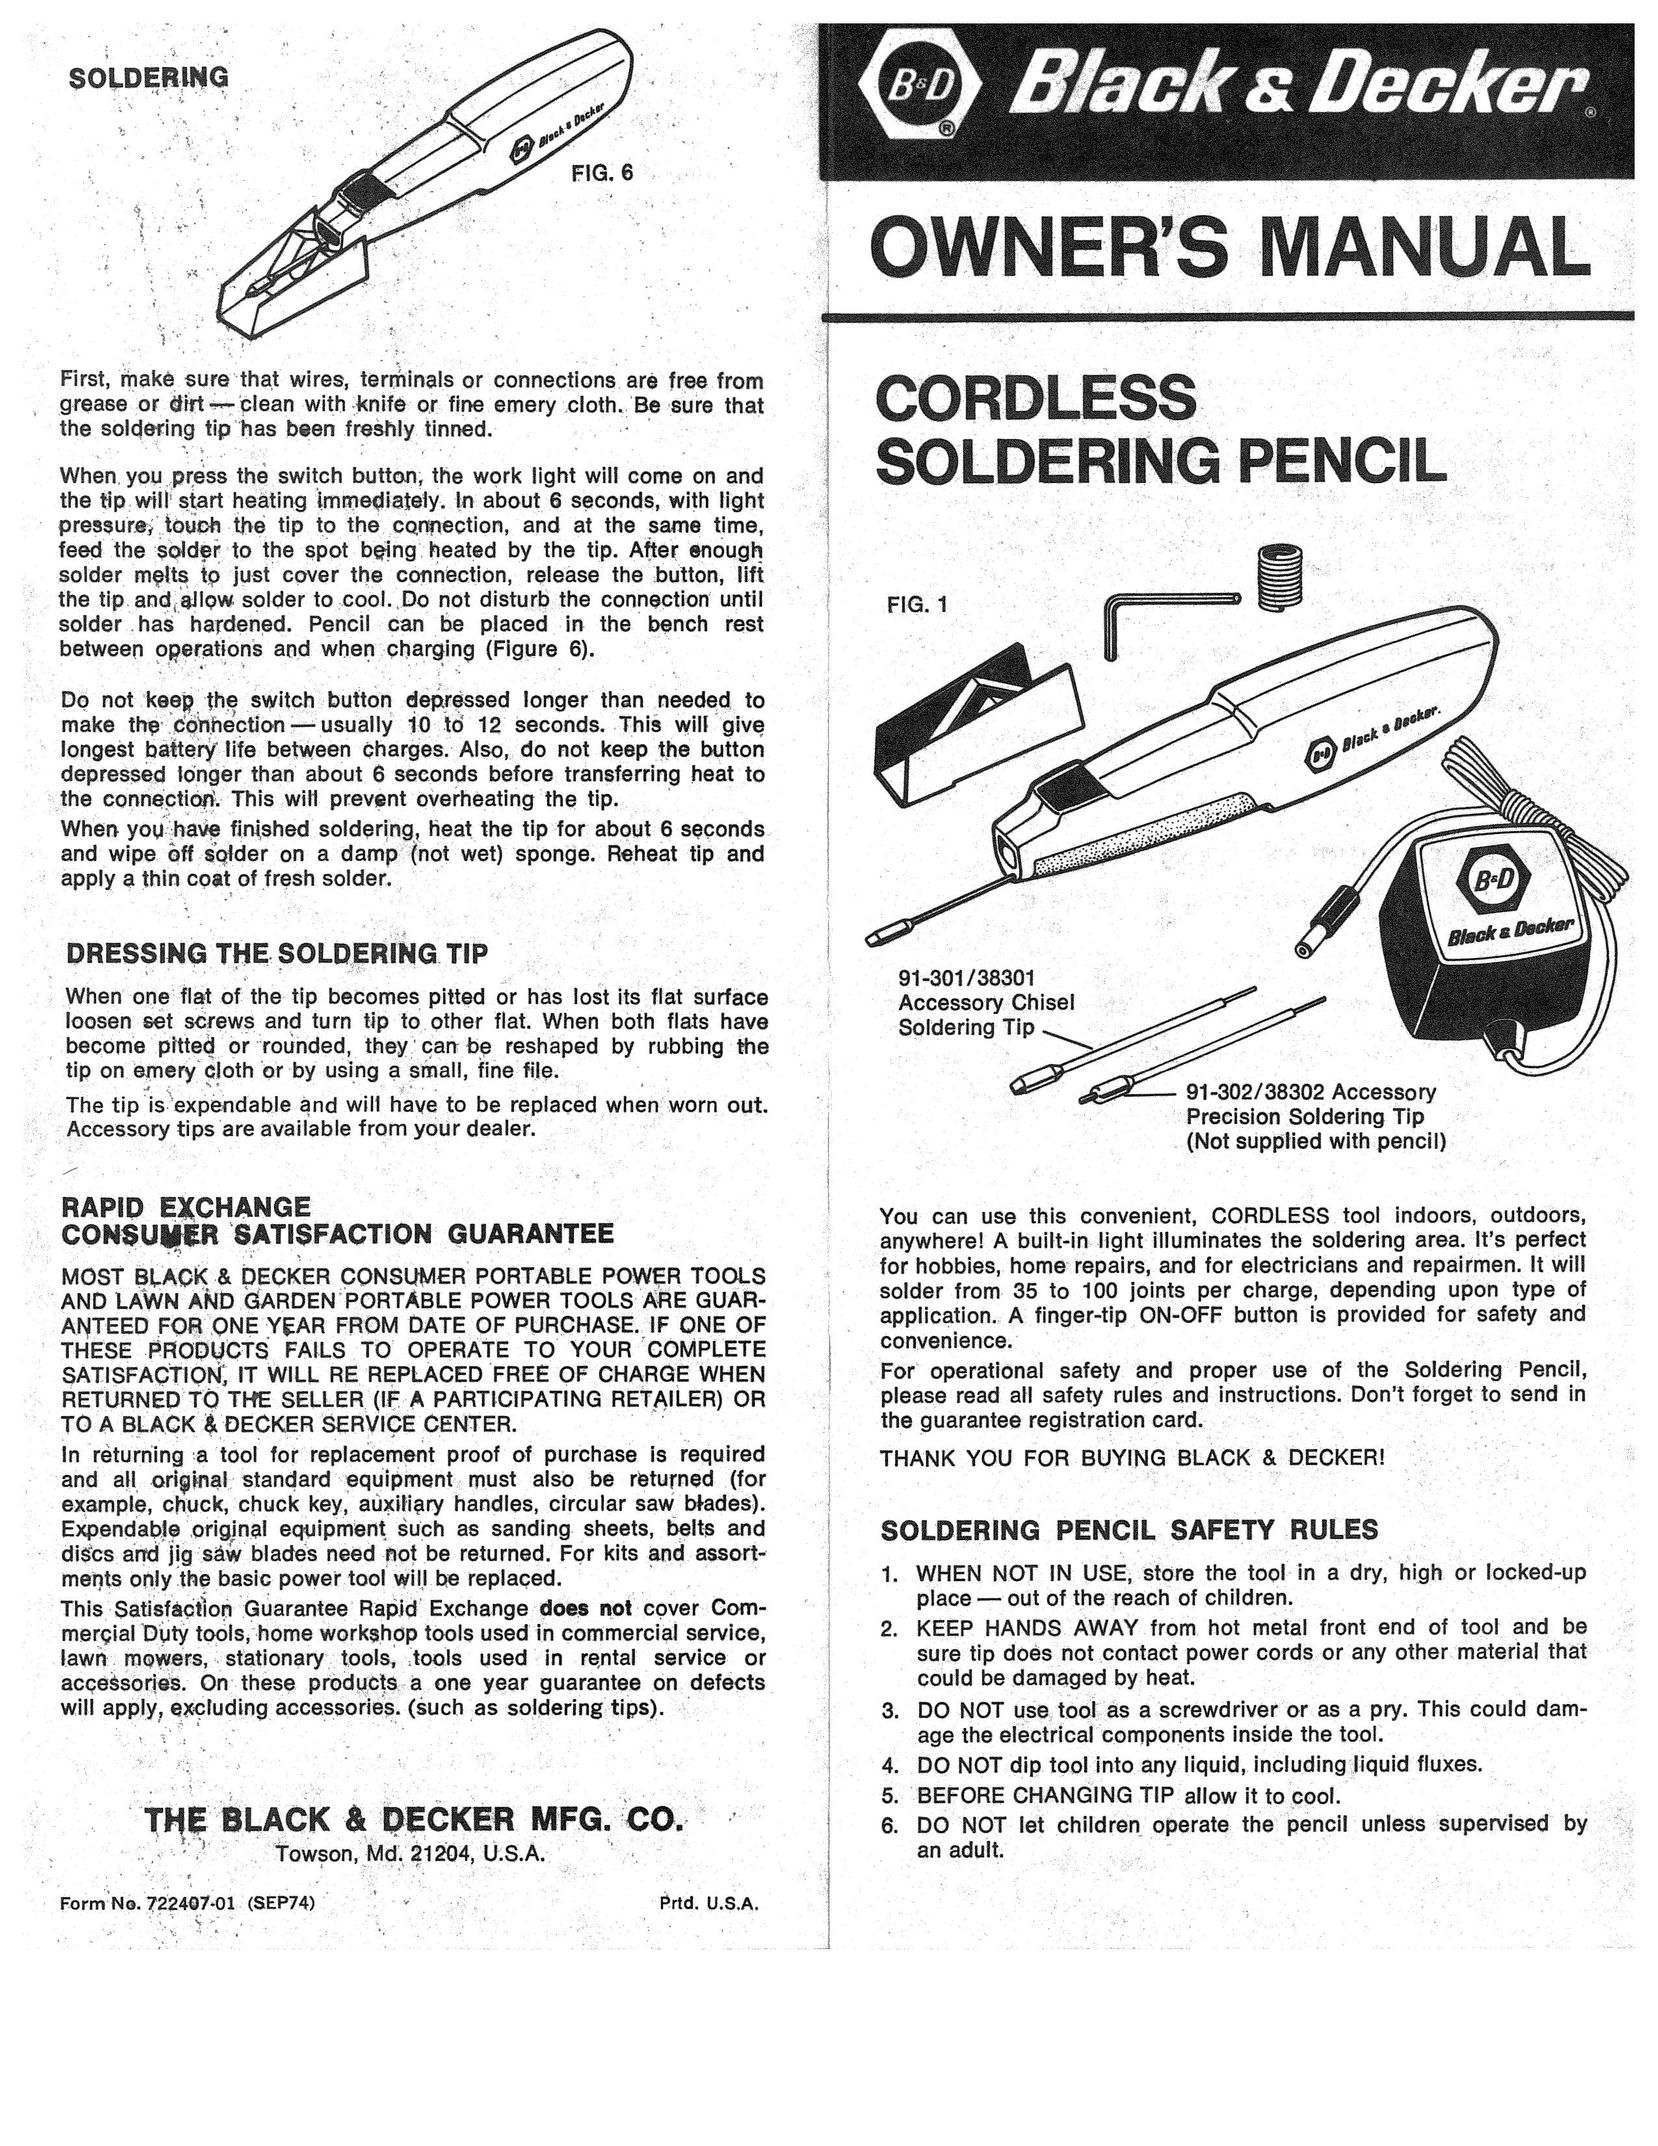 Black & Decker 91-301/38301 Soldering Gun User Manual